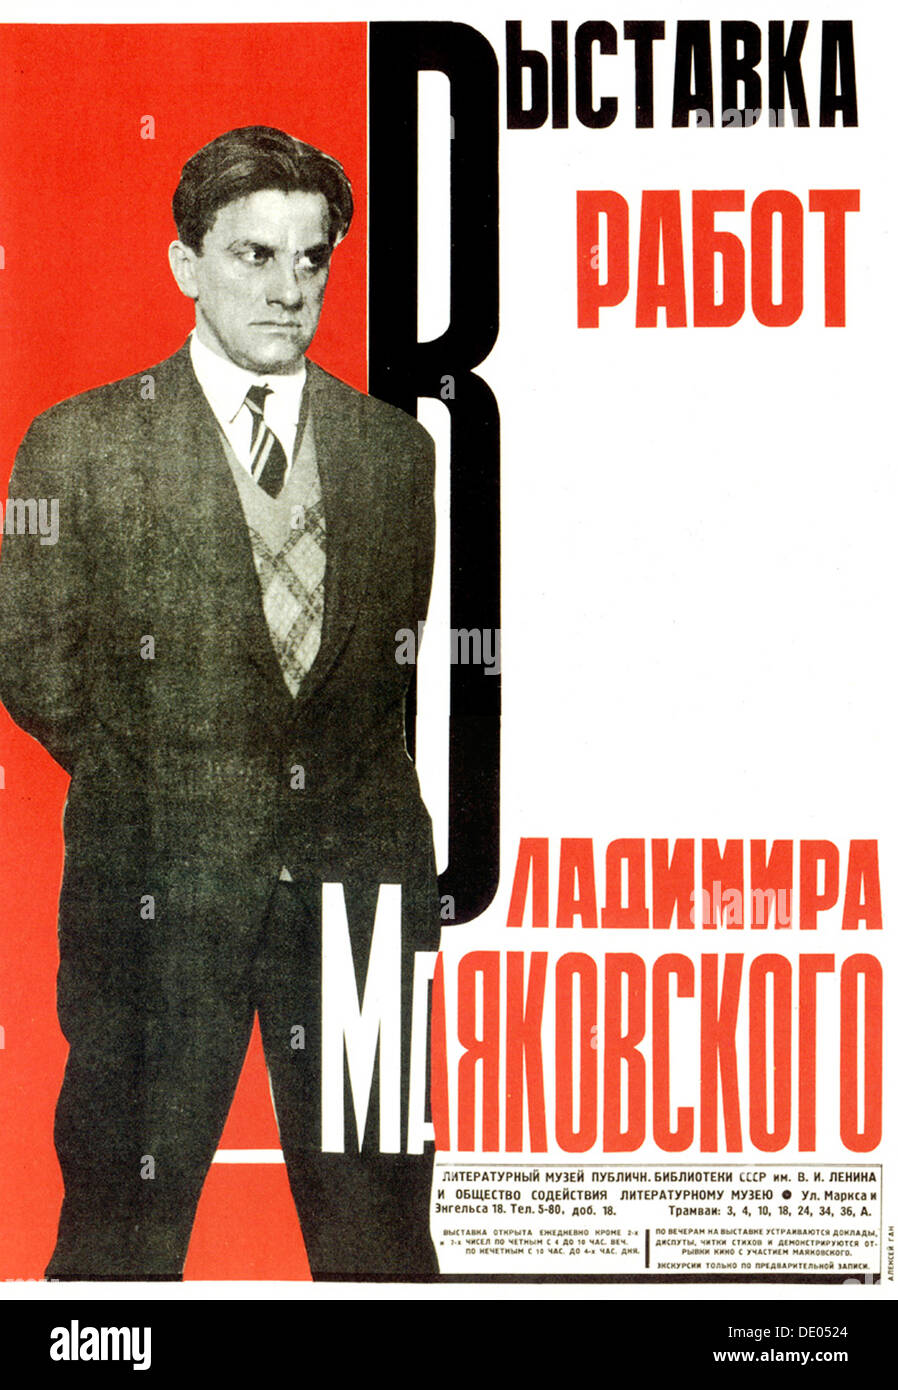 Poster for an exhibition of Vladimir Mayakovsky's works, 1931.  Artist: Aleksey Gan Stock Photo